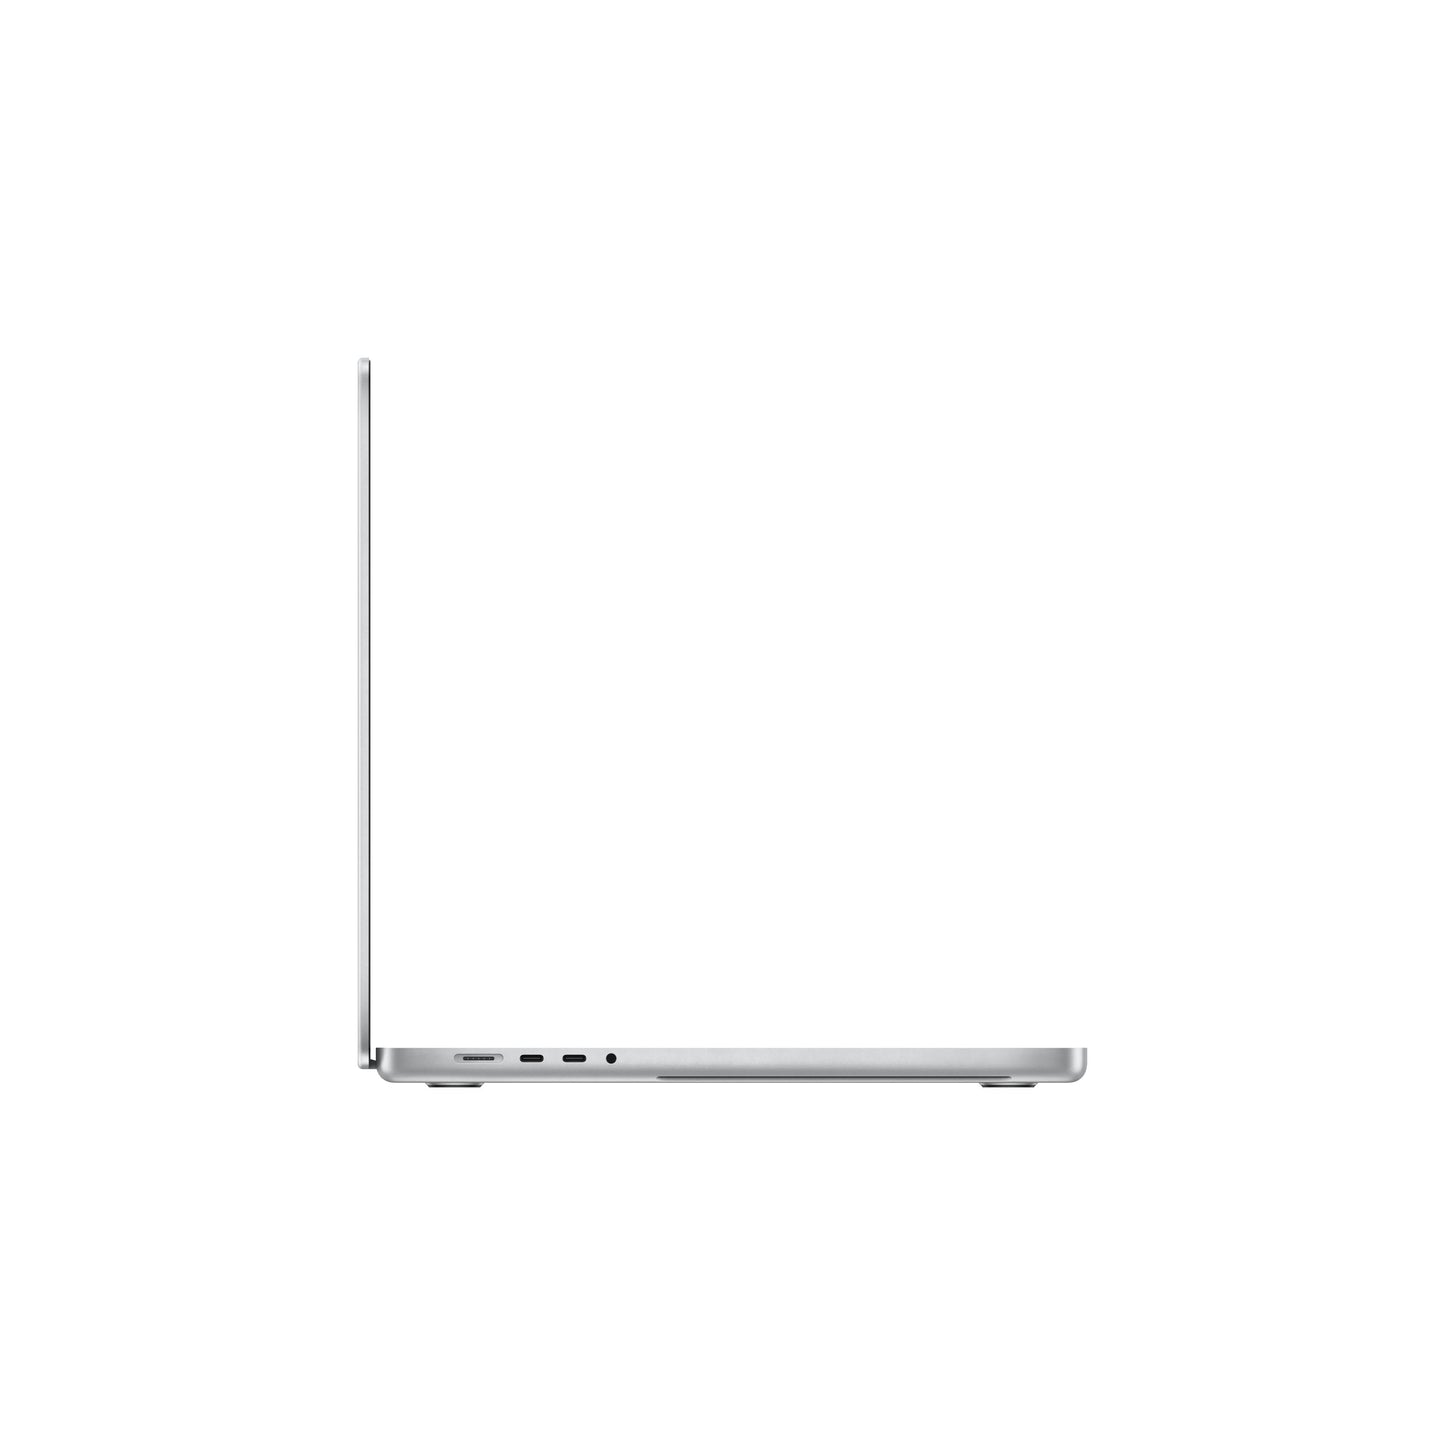 16-inch MacBook Pro: Apple M1 Max chip with 10‑core CPU and 32‑core GPU, 1TB SSD - Silver